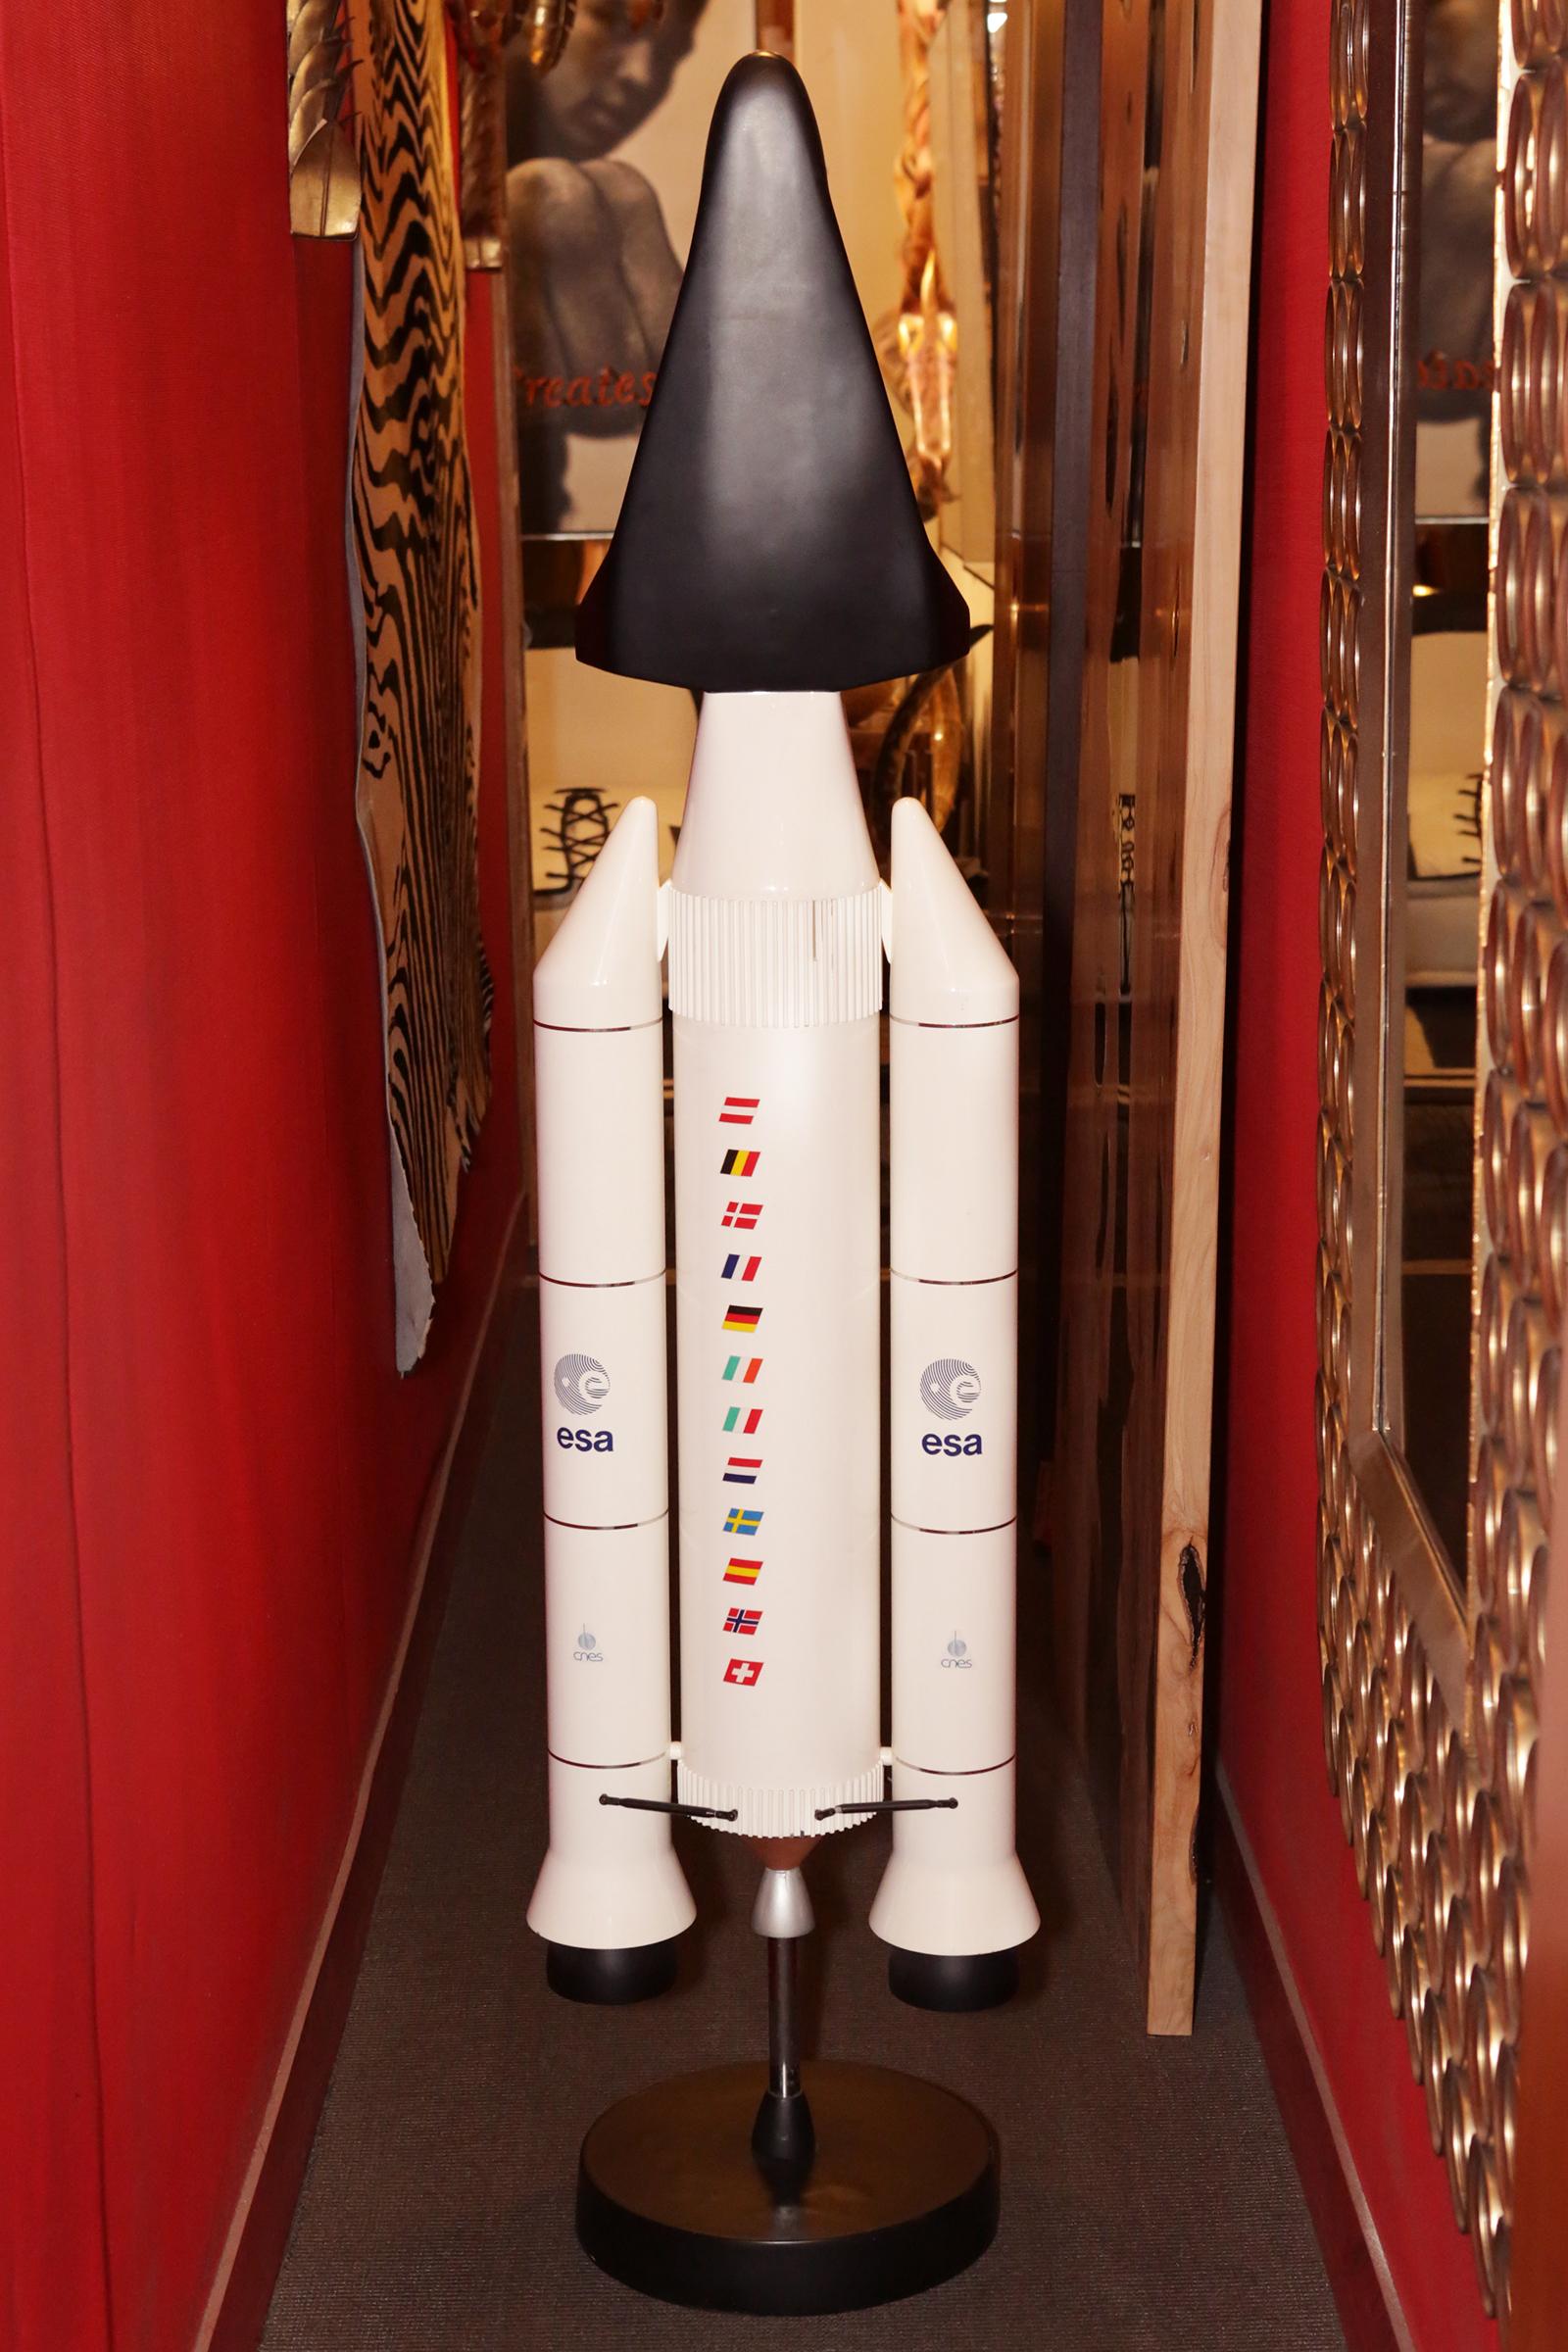 French Ariane V & Hermes Rocket Model